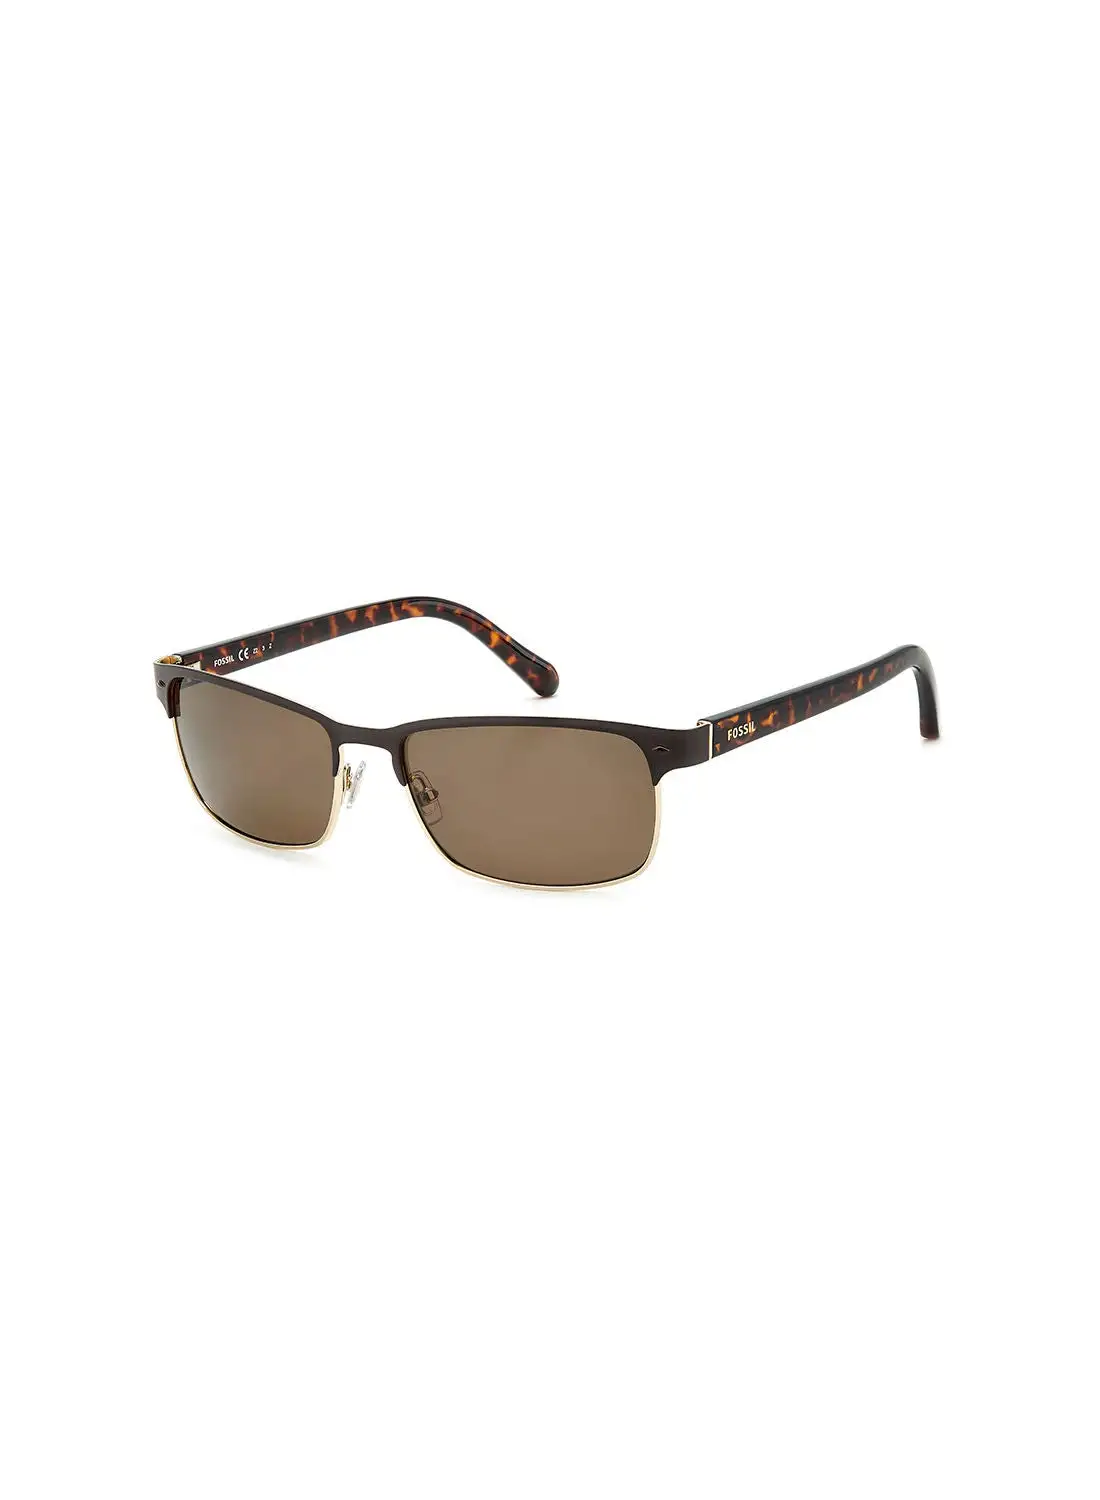 FOSSIL Men's UV Protection Rectangular Sunglasses - Fos 3000/P/S Brown 57 - Lens Size: 57 Mm